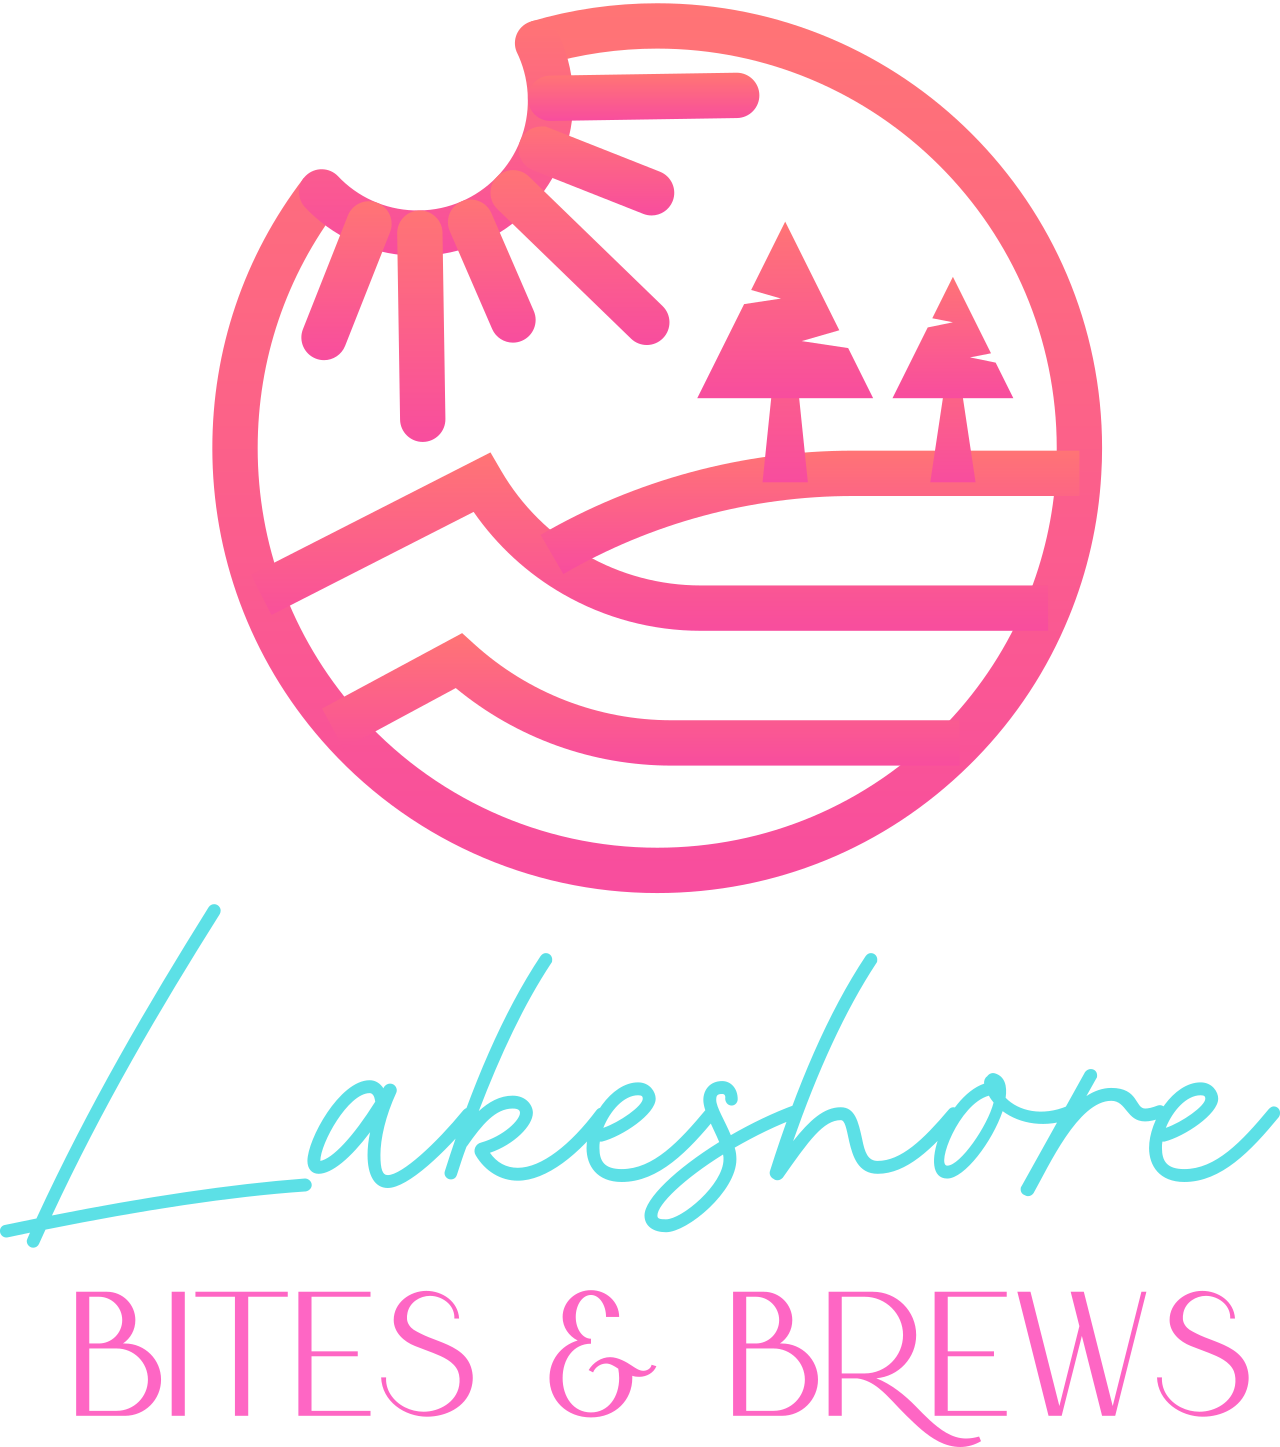 Lakeshore's logo